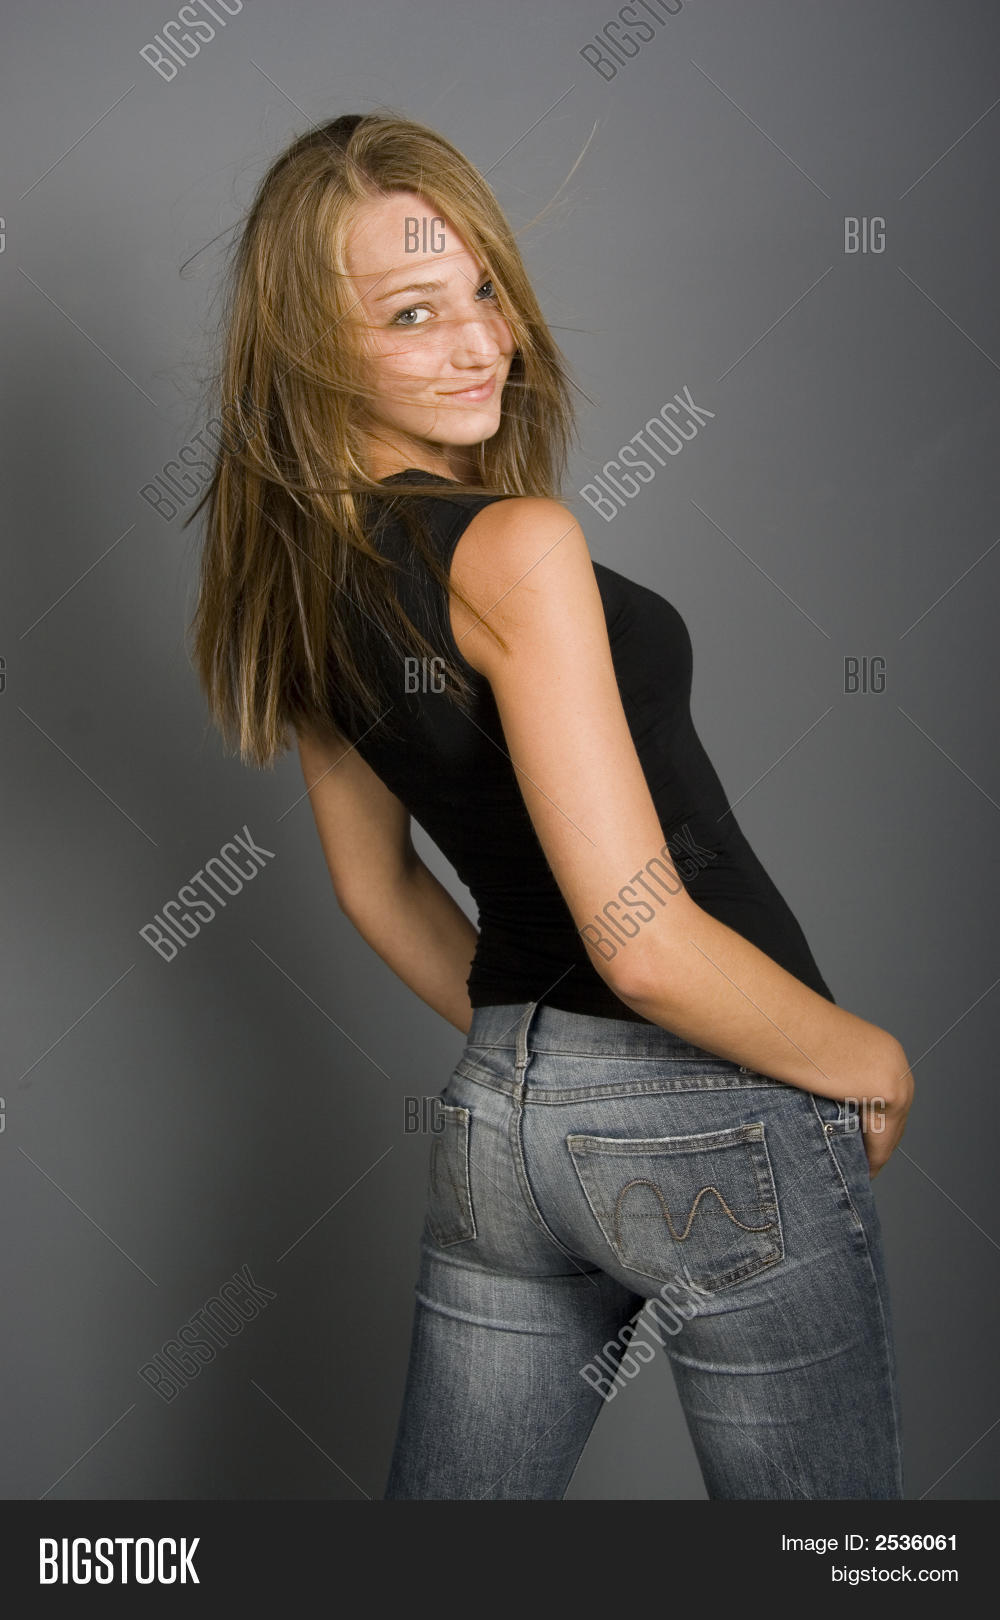 david ricketts add photo pics of women in tight jeans